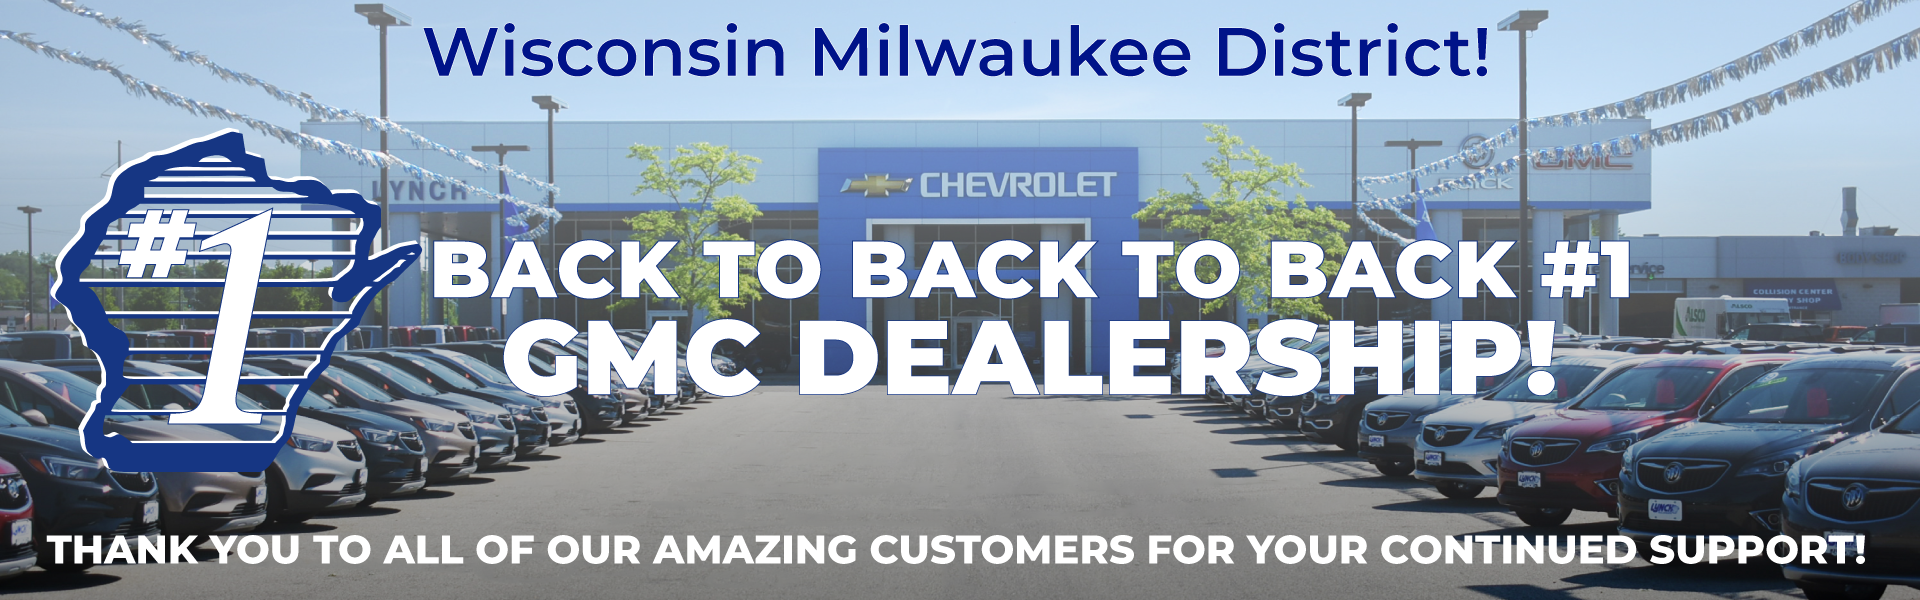 #1 GMC Dealership Milwaukee District